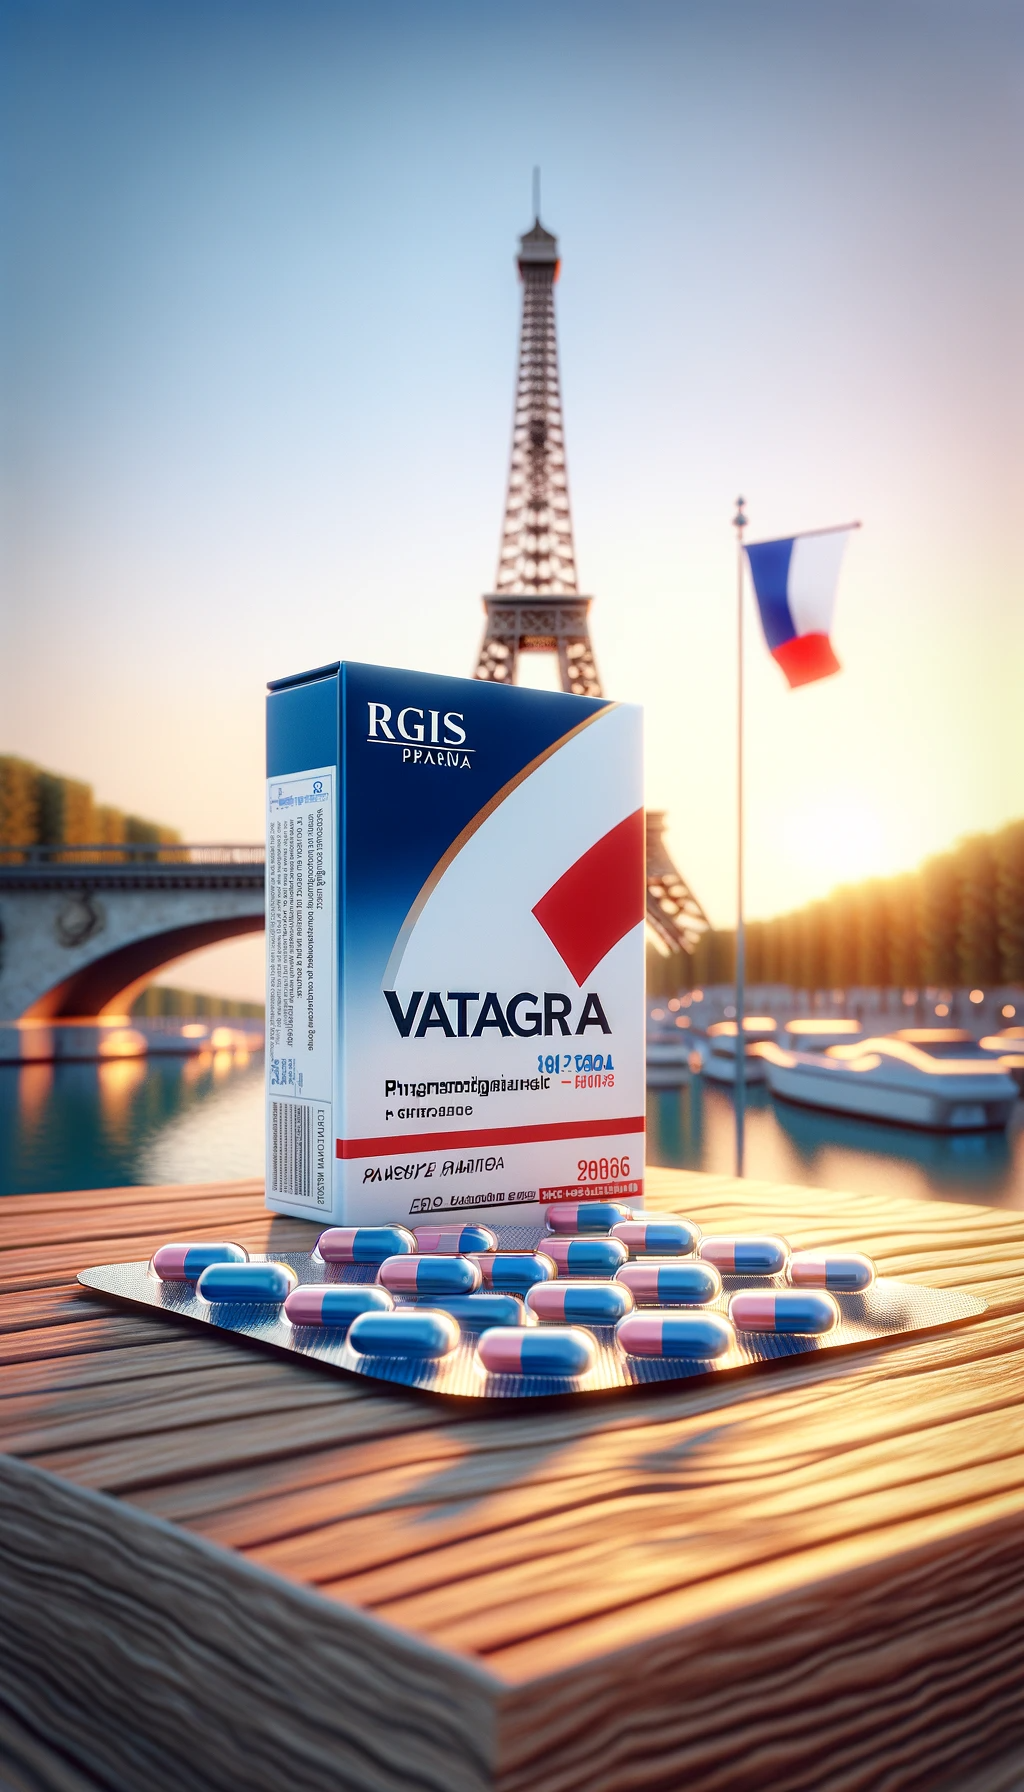 France pharmacie ligne products viagra